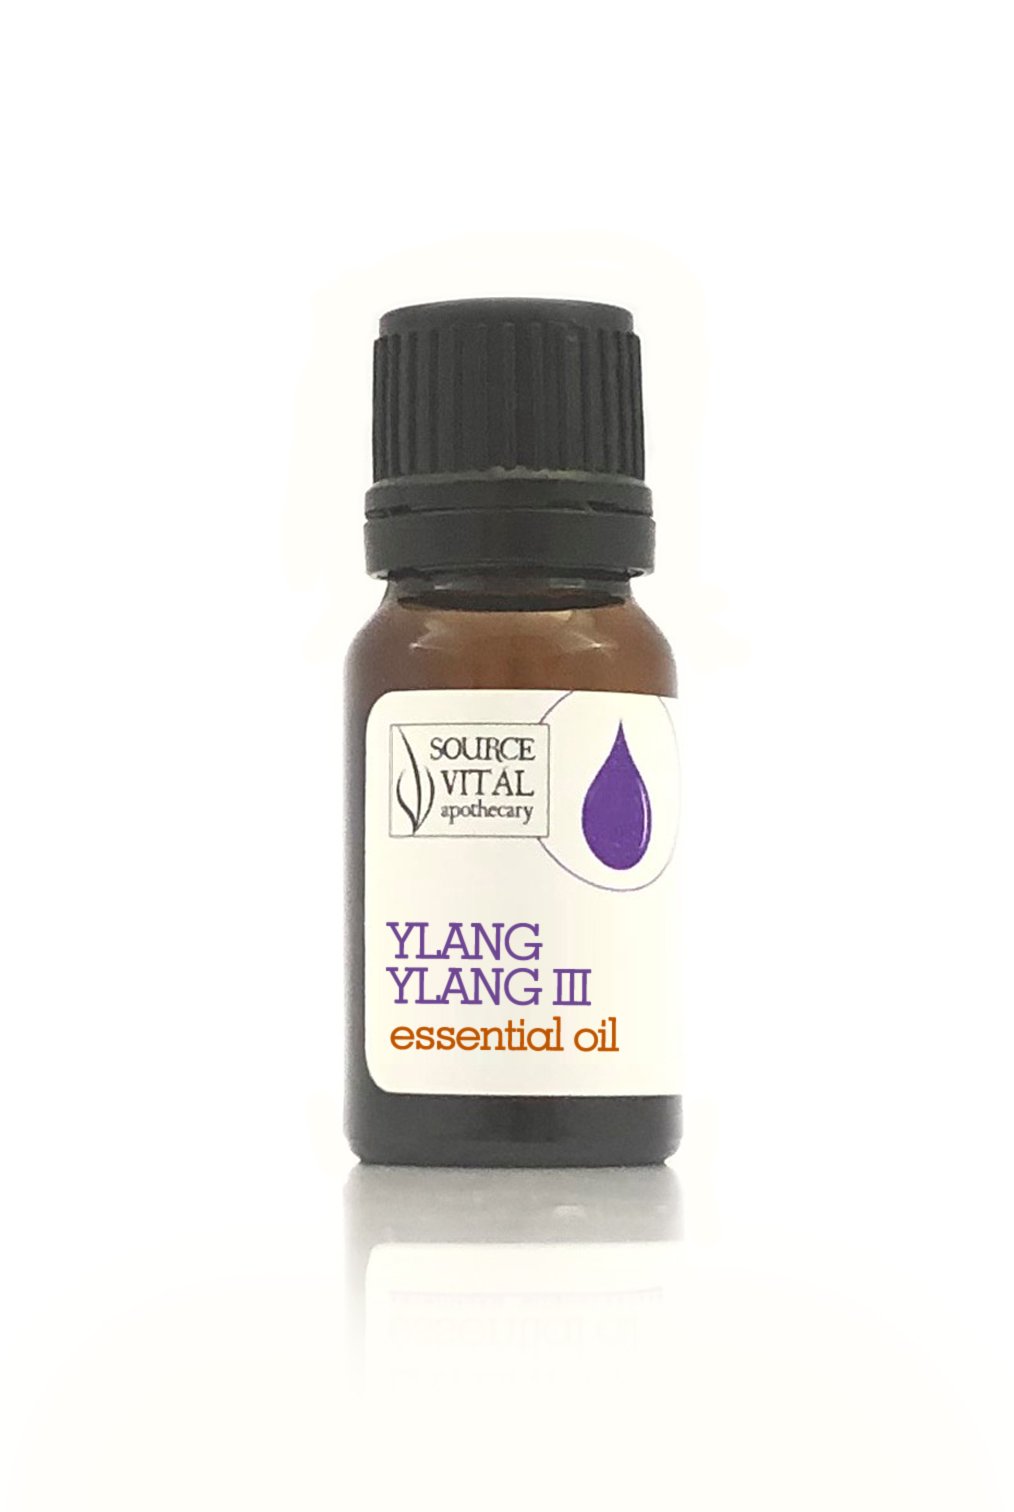 Huile essentielle d'Ylang-ylang III bio, aromathérapie